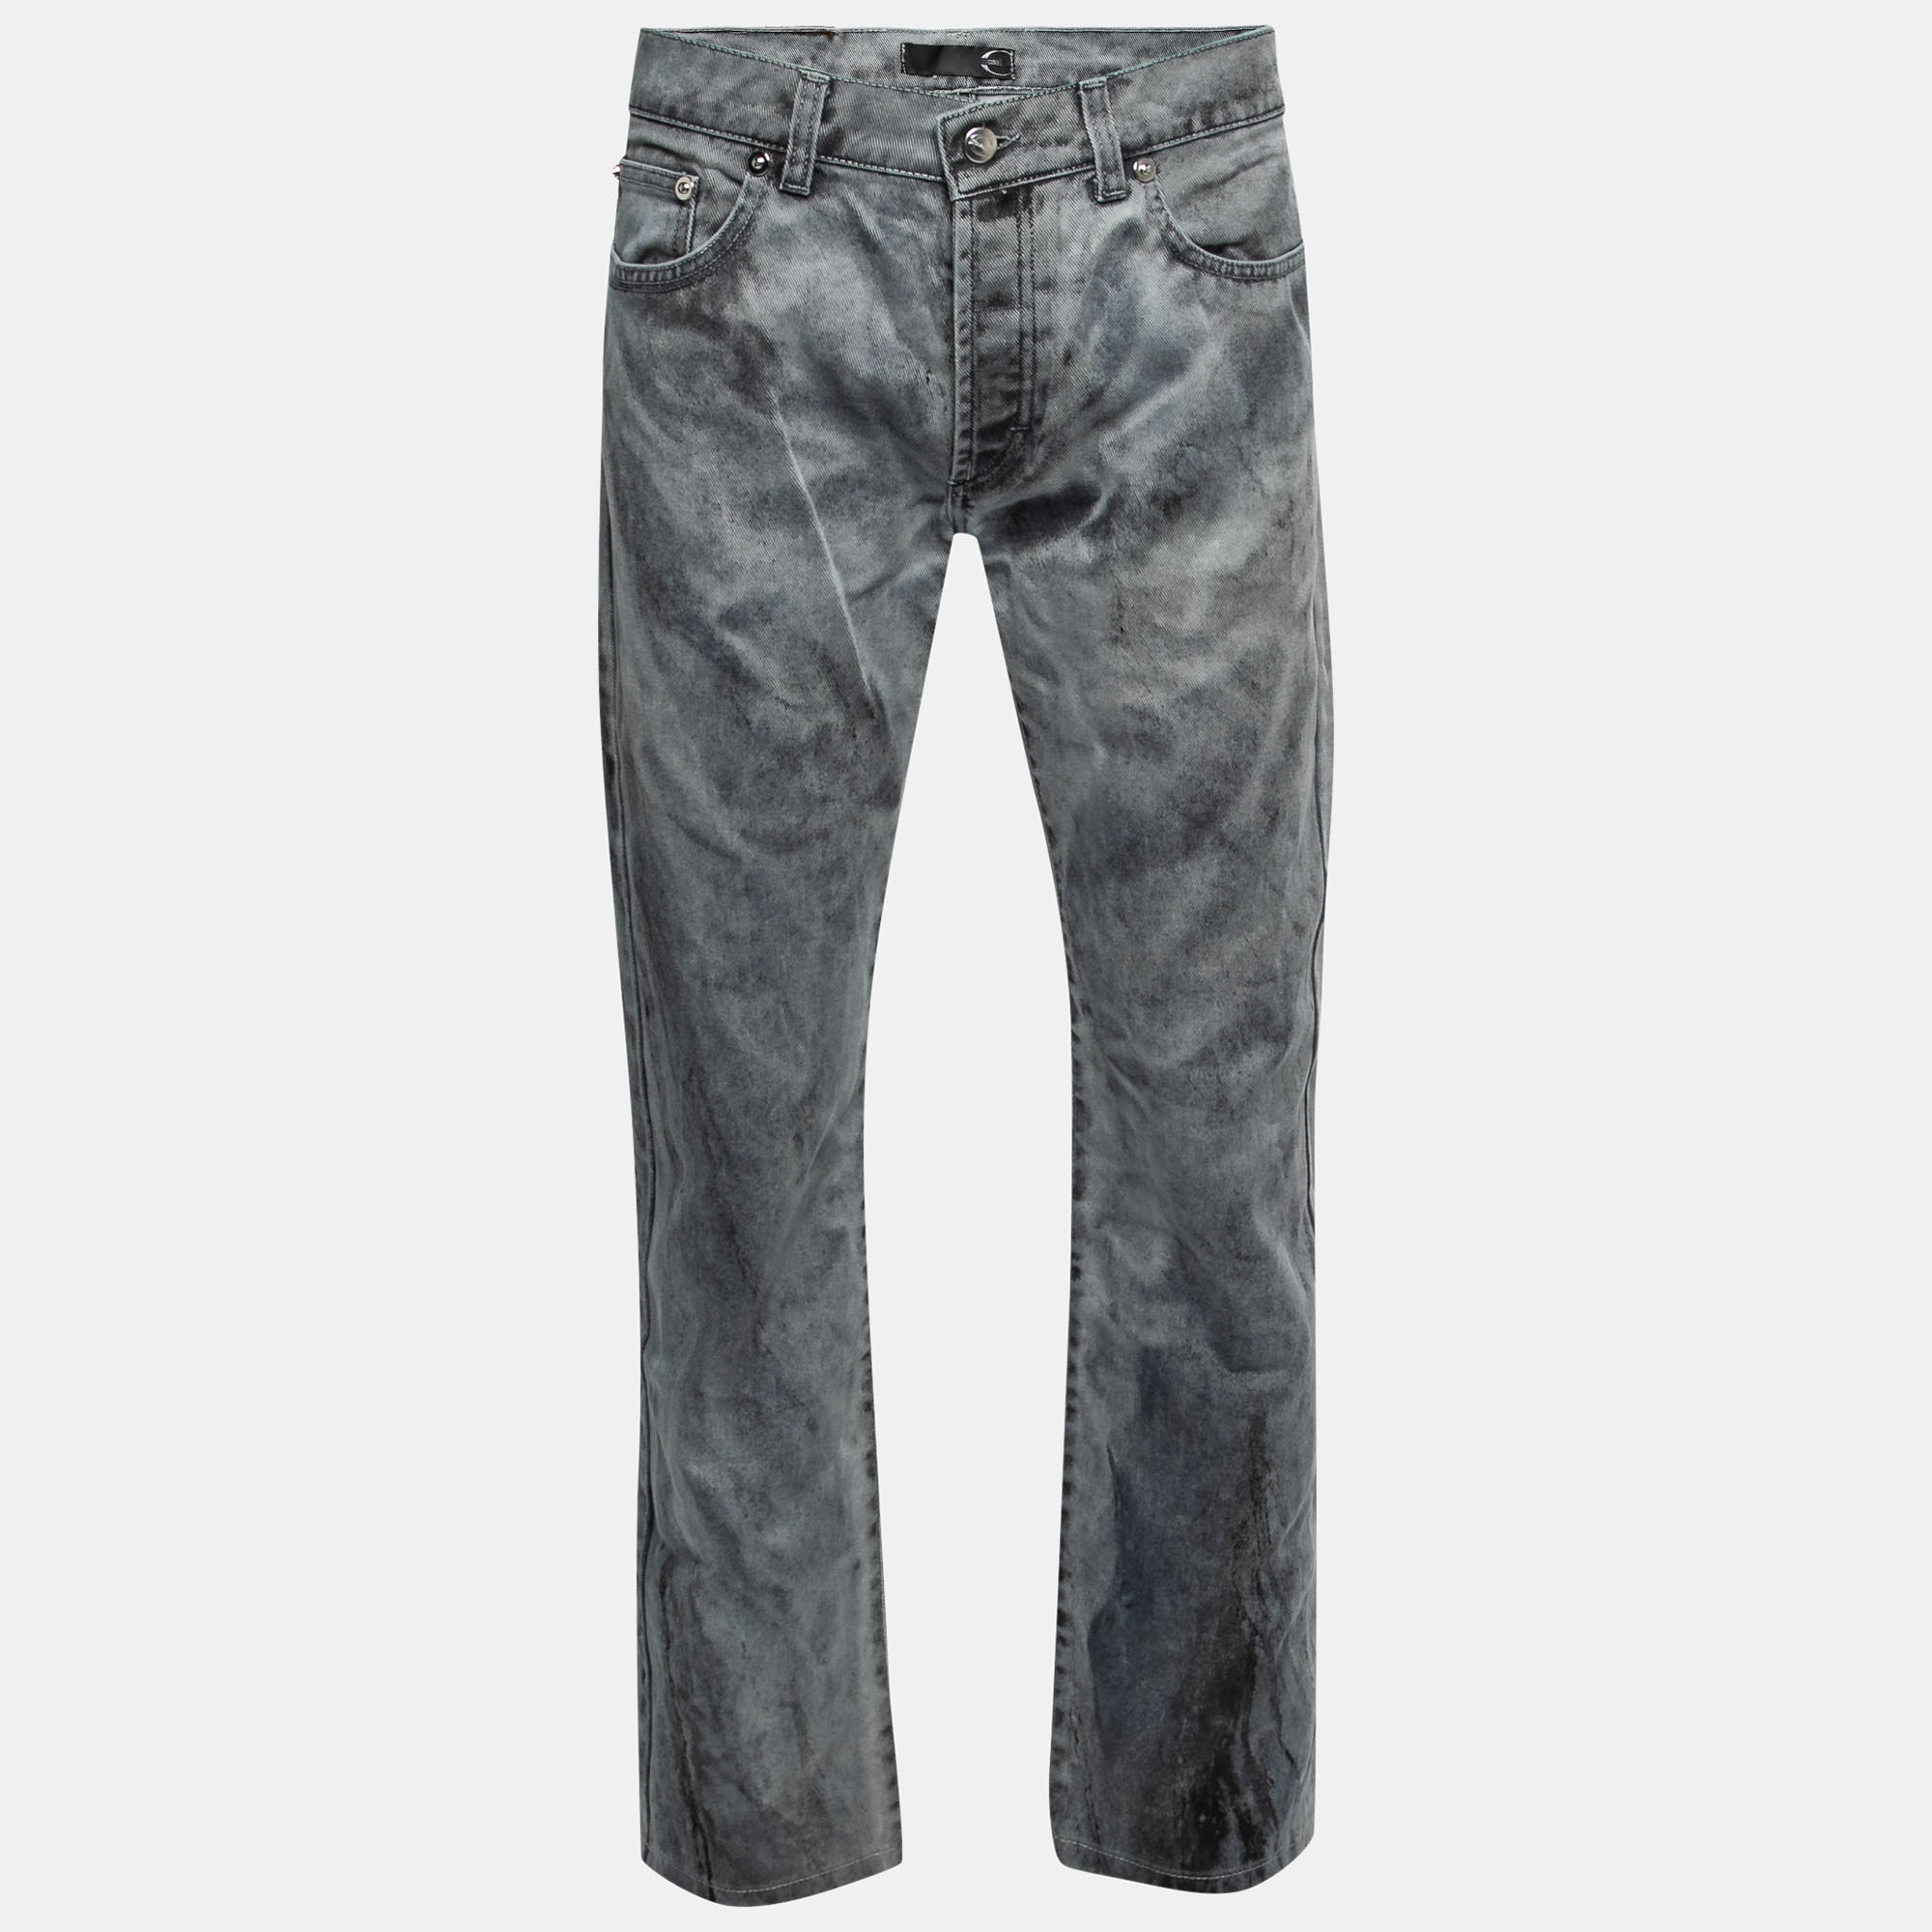 Just Cavalli Grey Distressed Painted Denim Jeans XL Waist 36